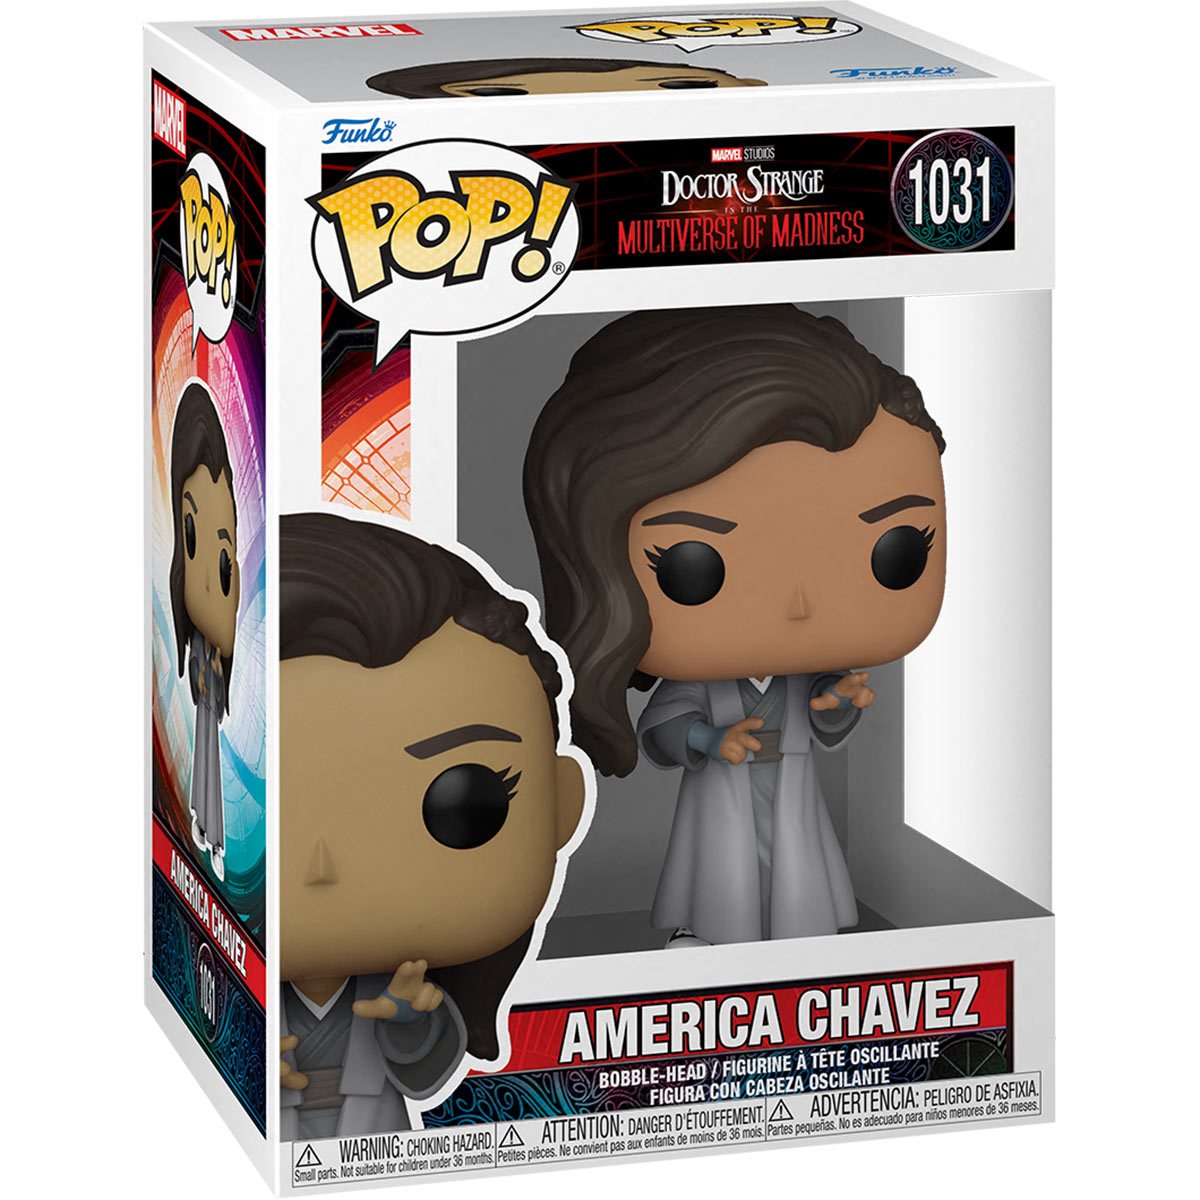 Doctor Strange Multiverse America Chavez Funko Pop! Vinyl Figure #1031